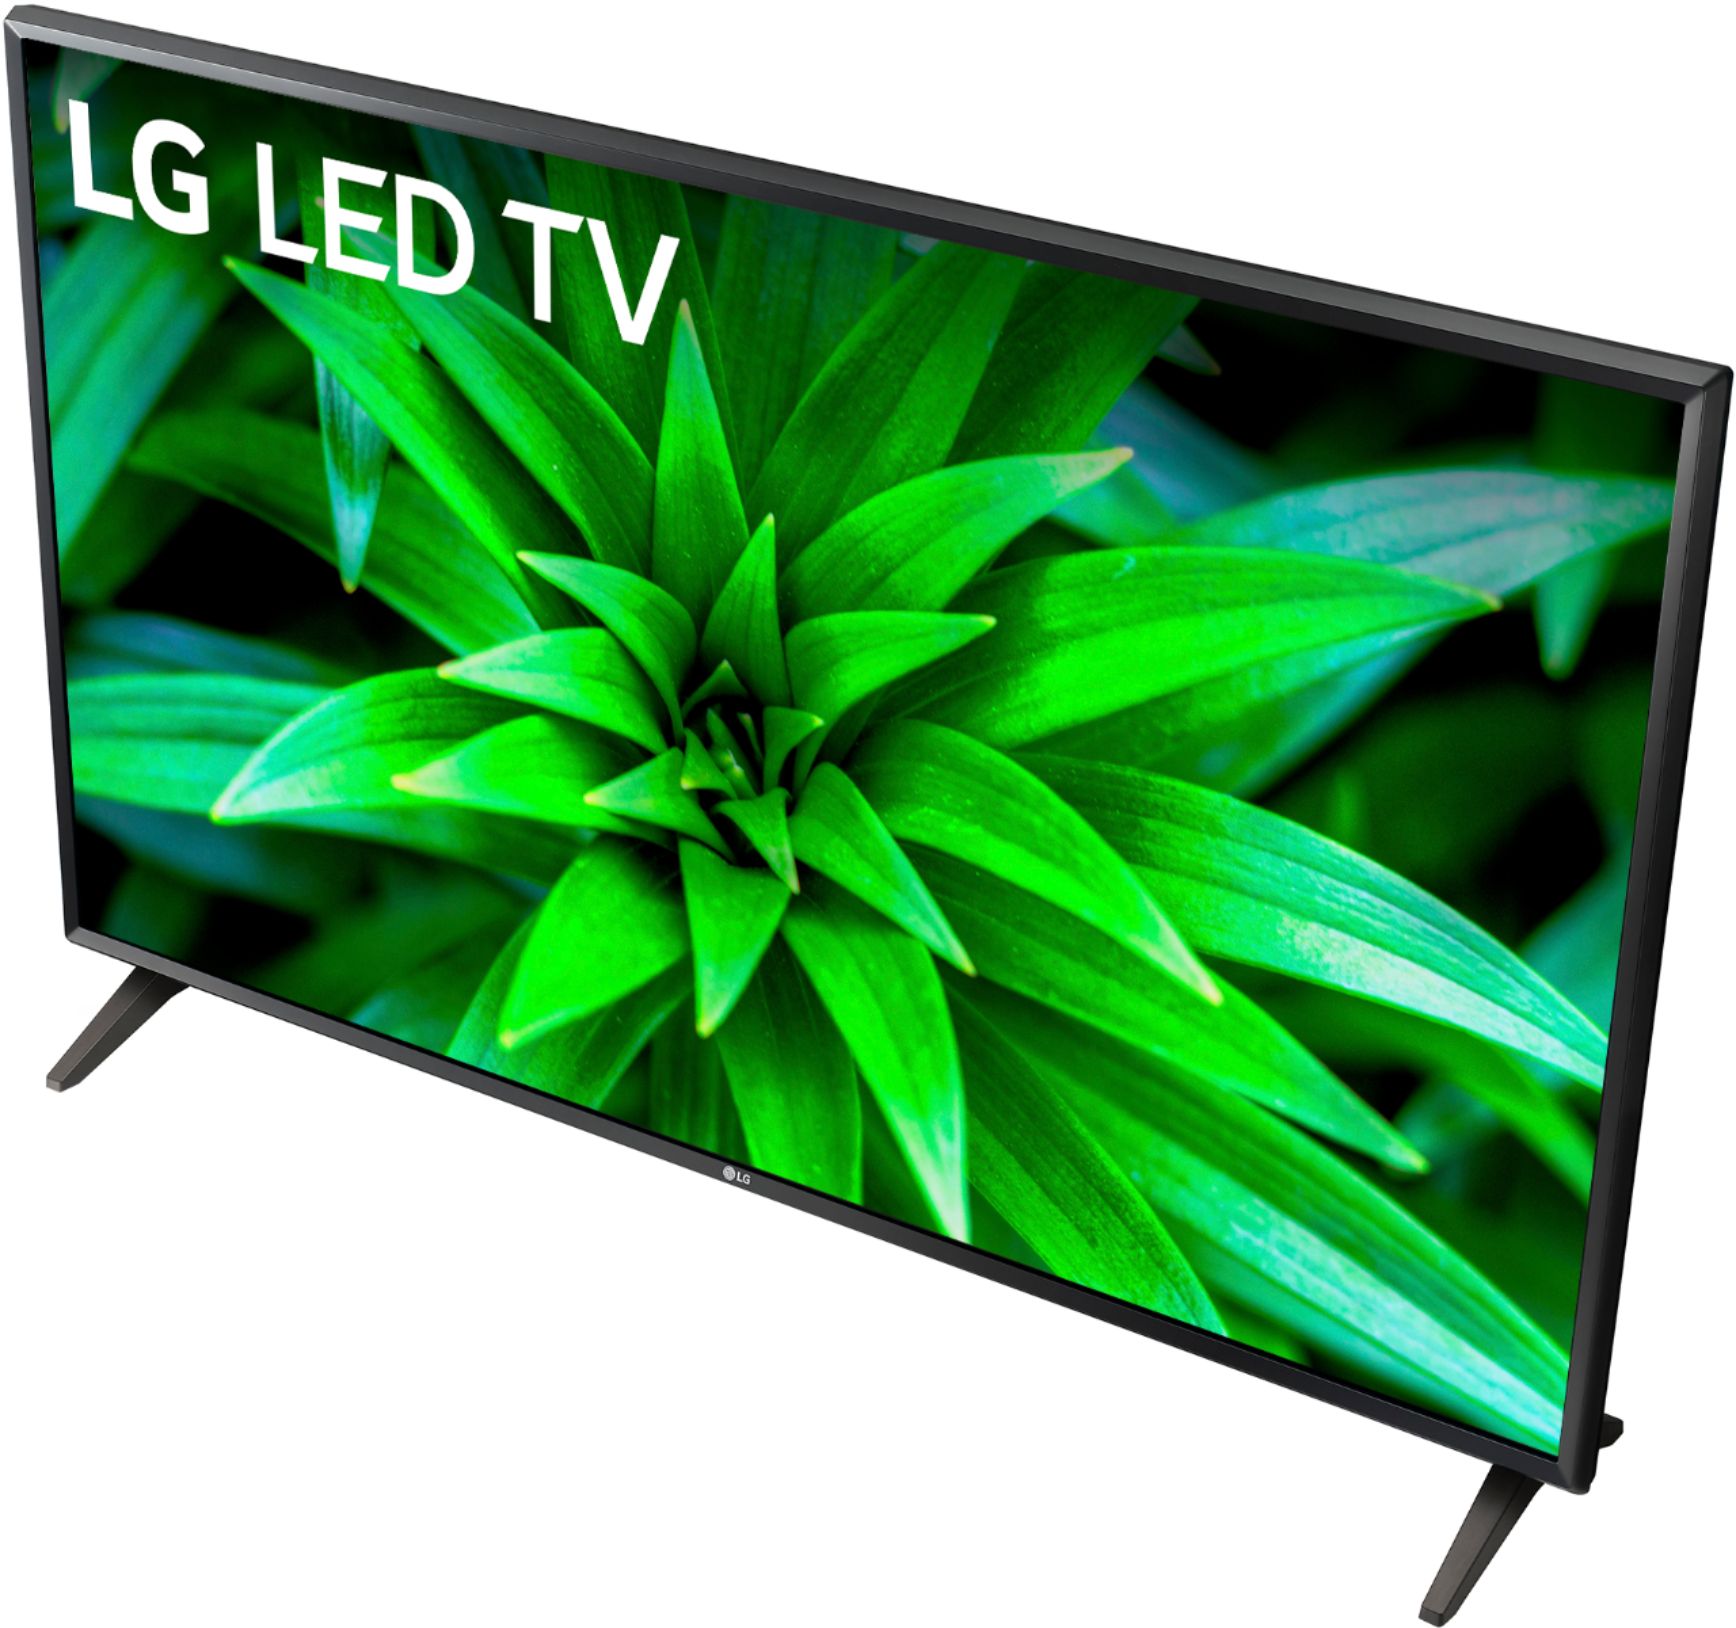 Ripley - TELEVISOR LG LED/LCD FULL HD 43 SMART TV 43LM6370PSB